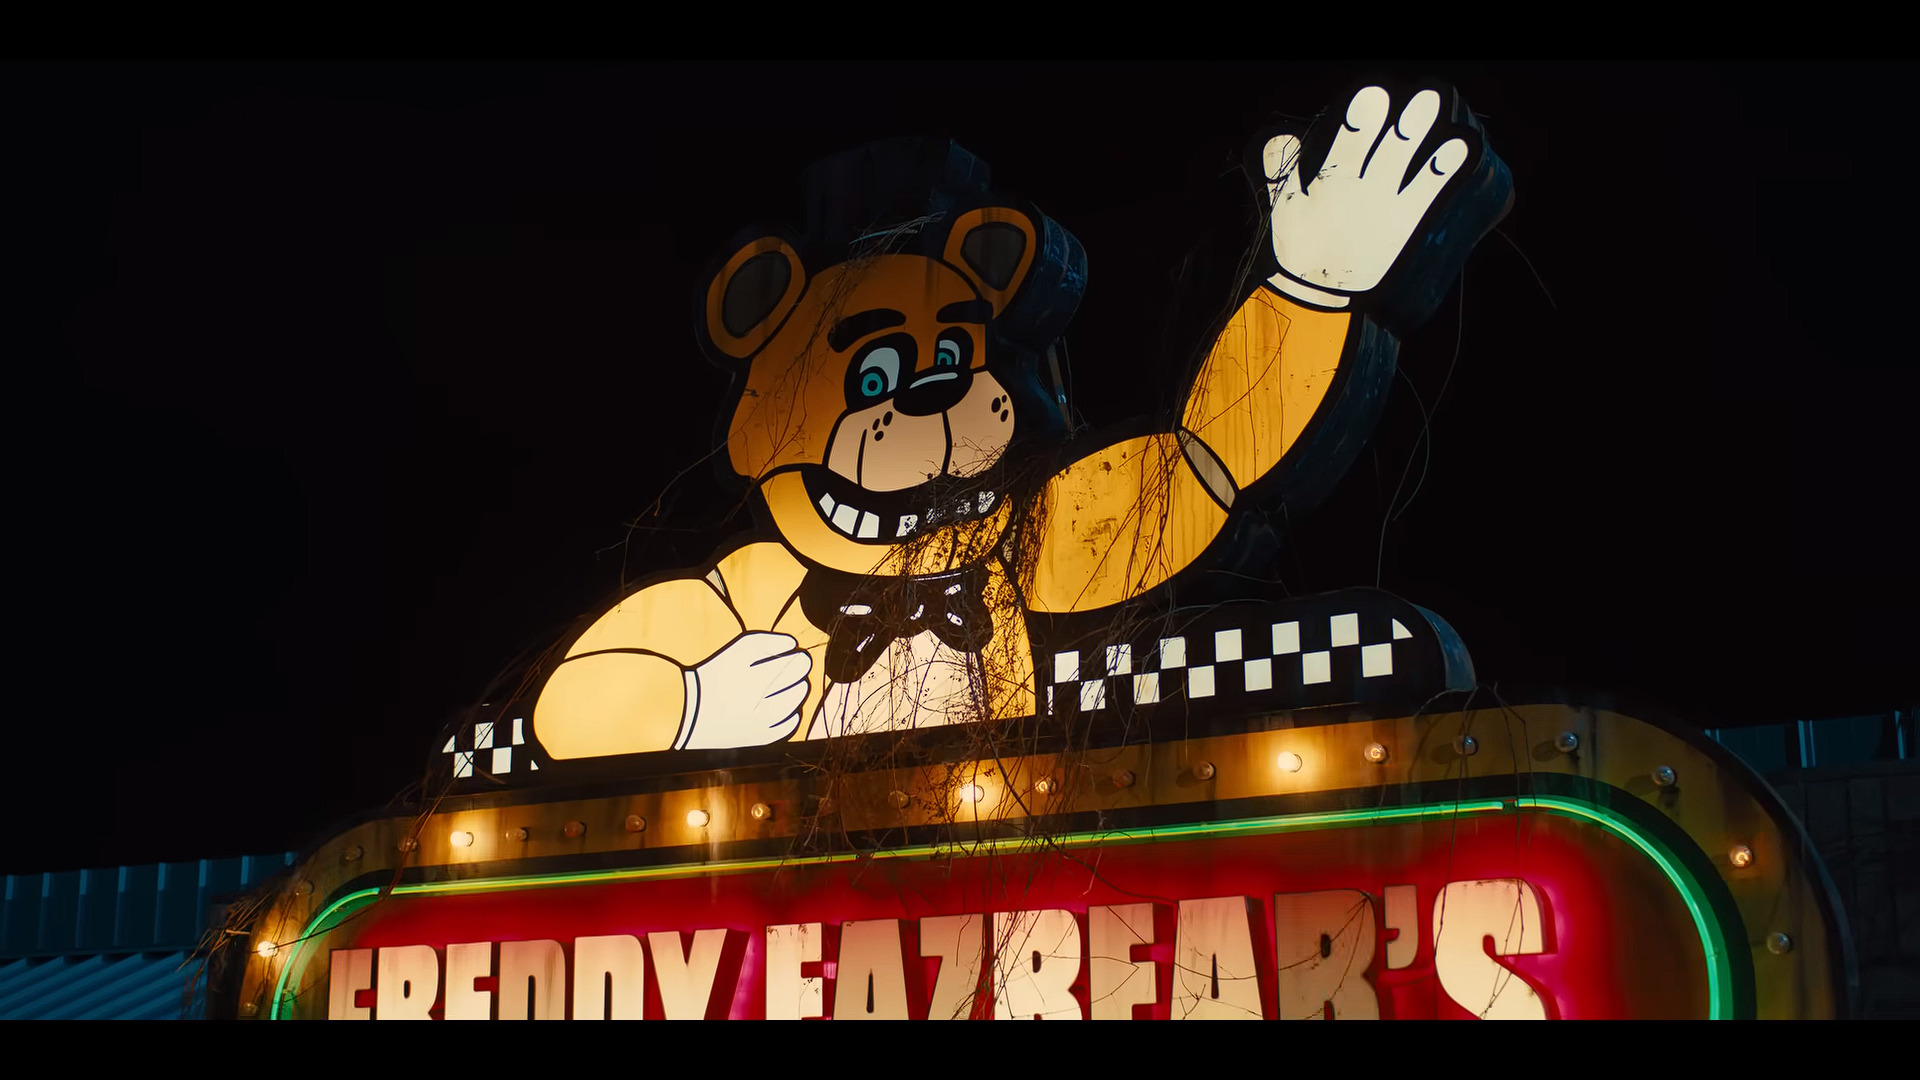 Five Nights At Freddy's: filme inspirado no game de terror ganha novo teaser